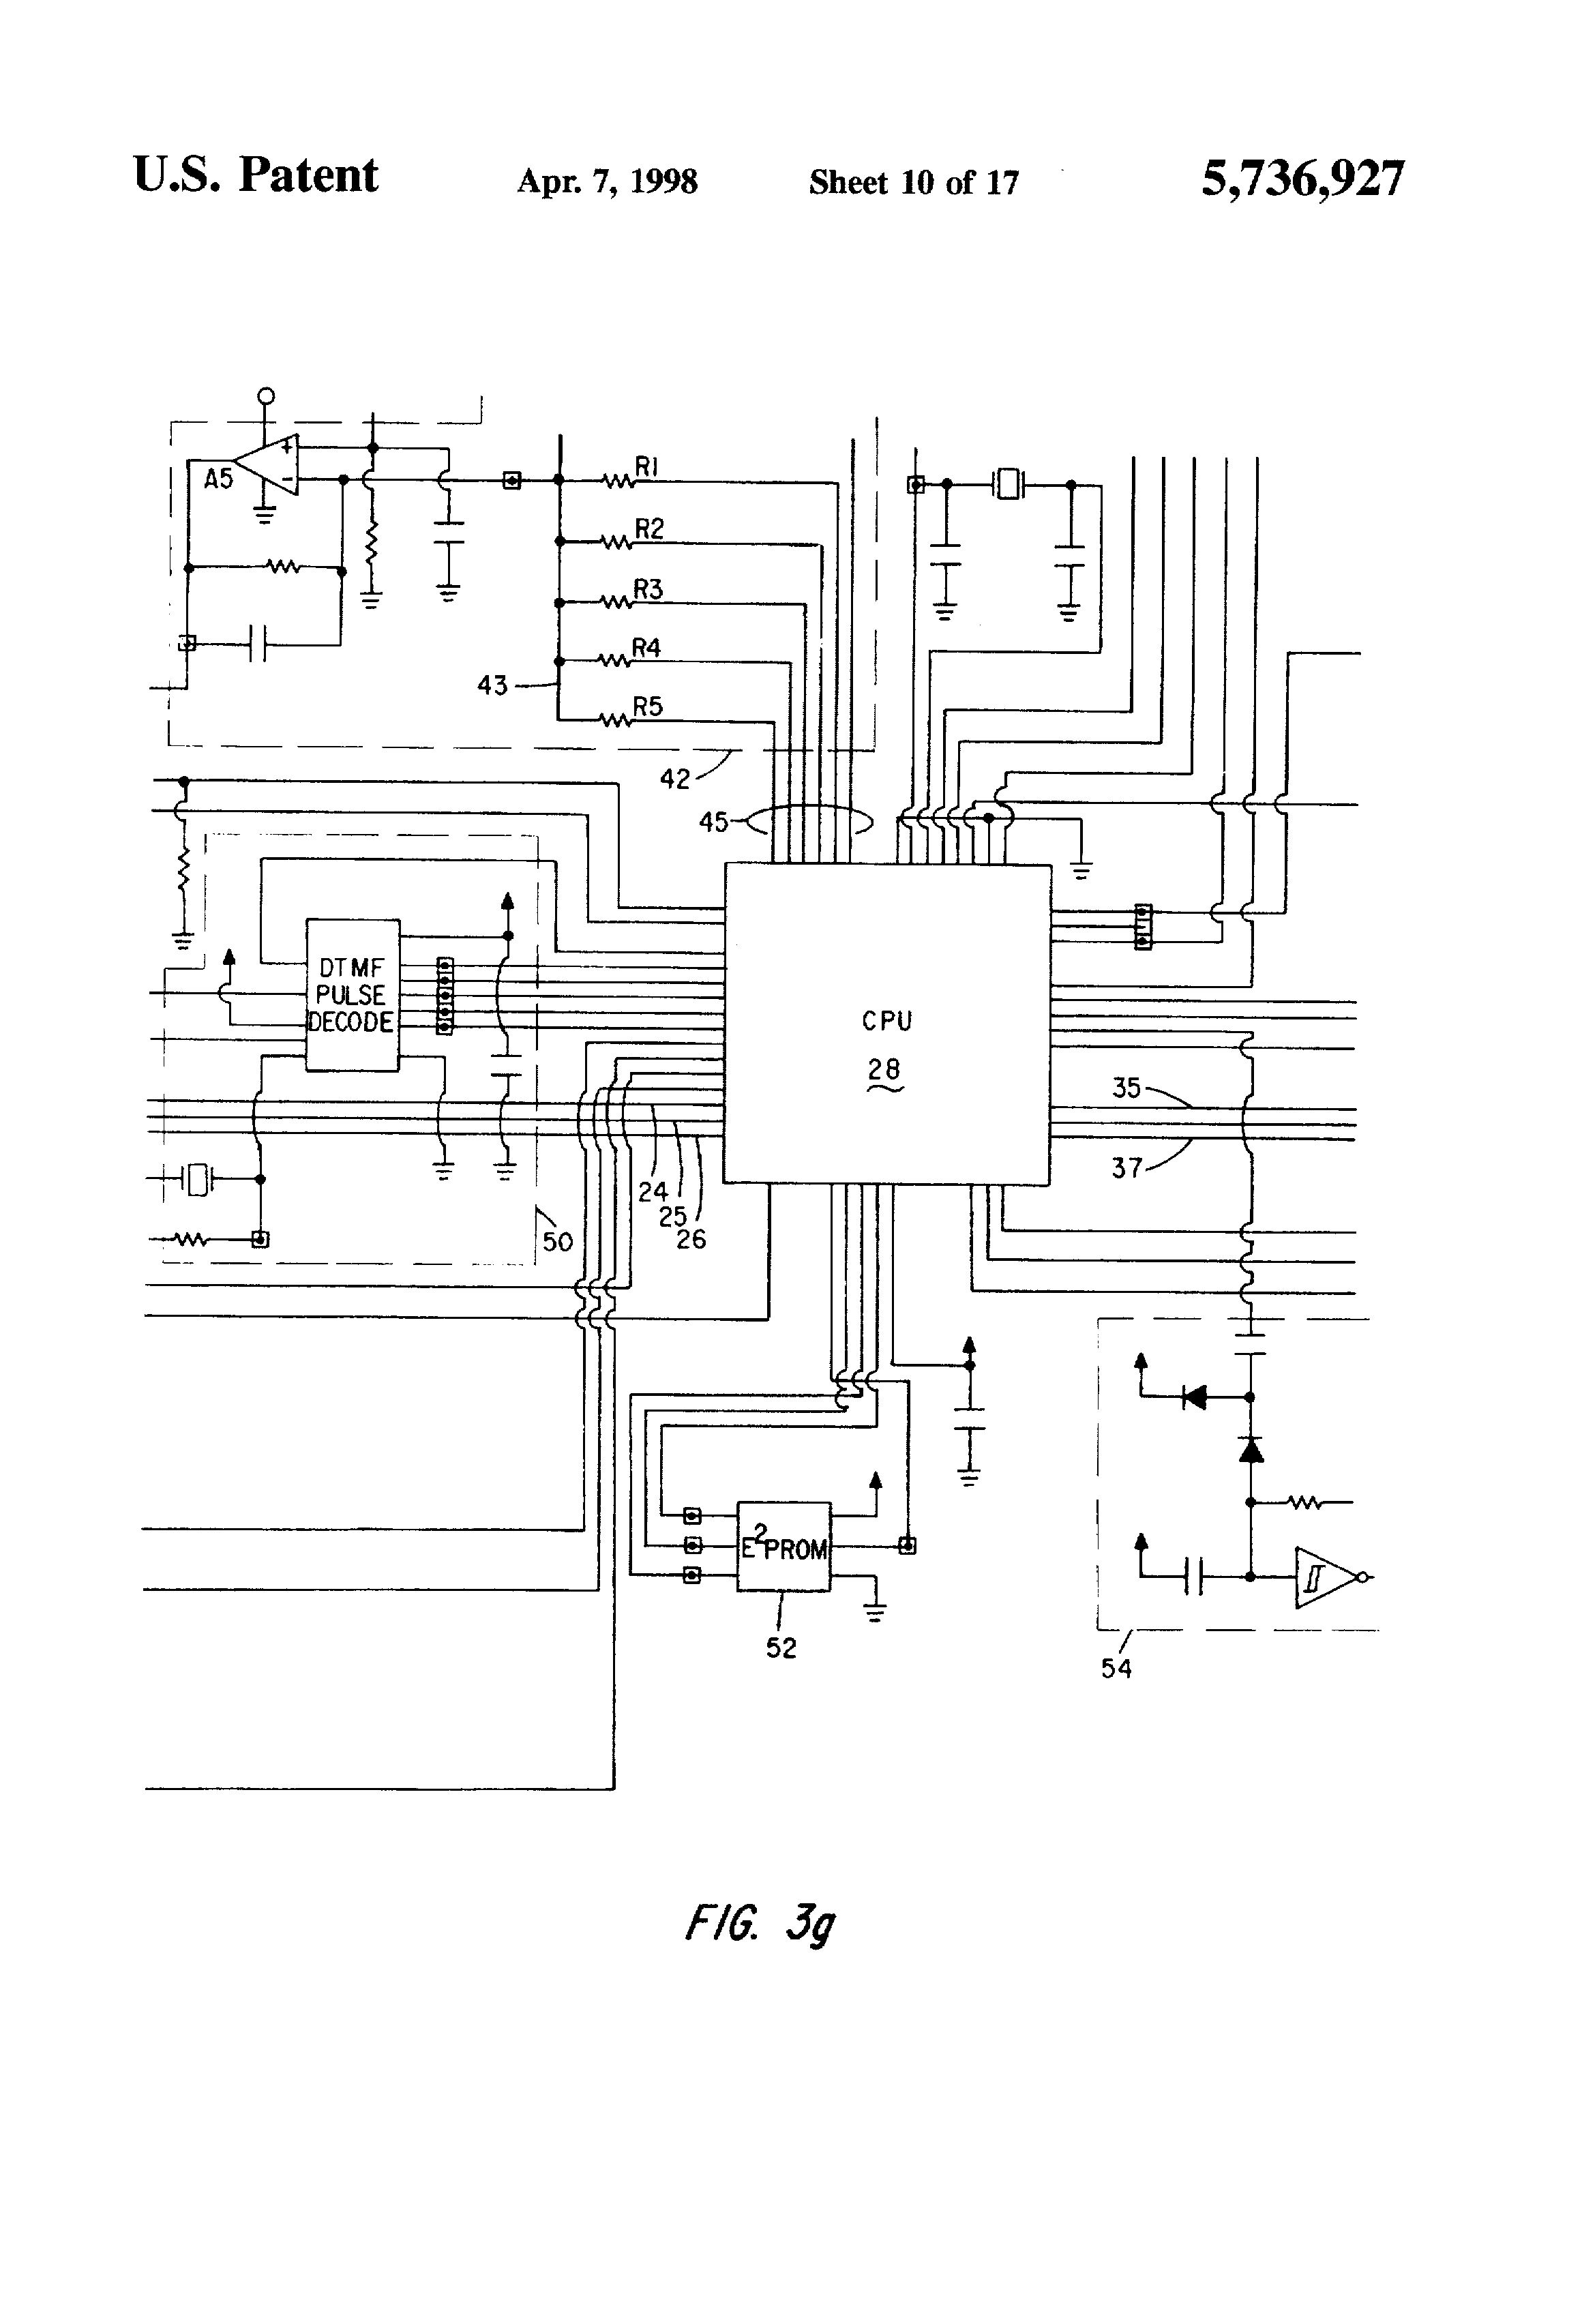 vista 32fb program wiring diagram